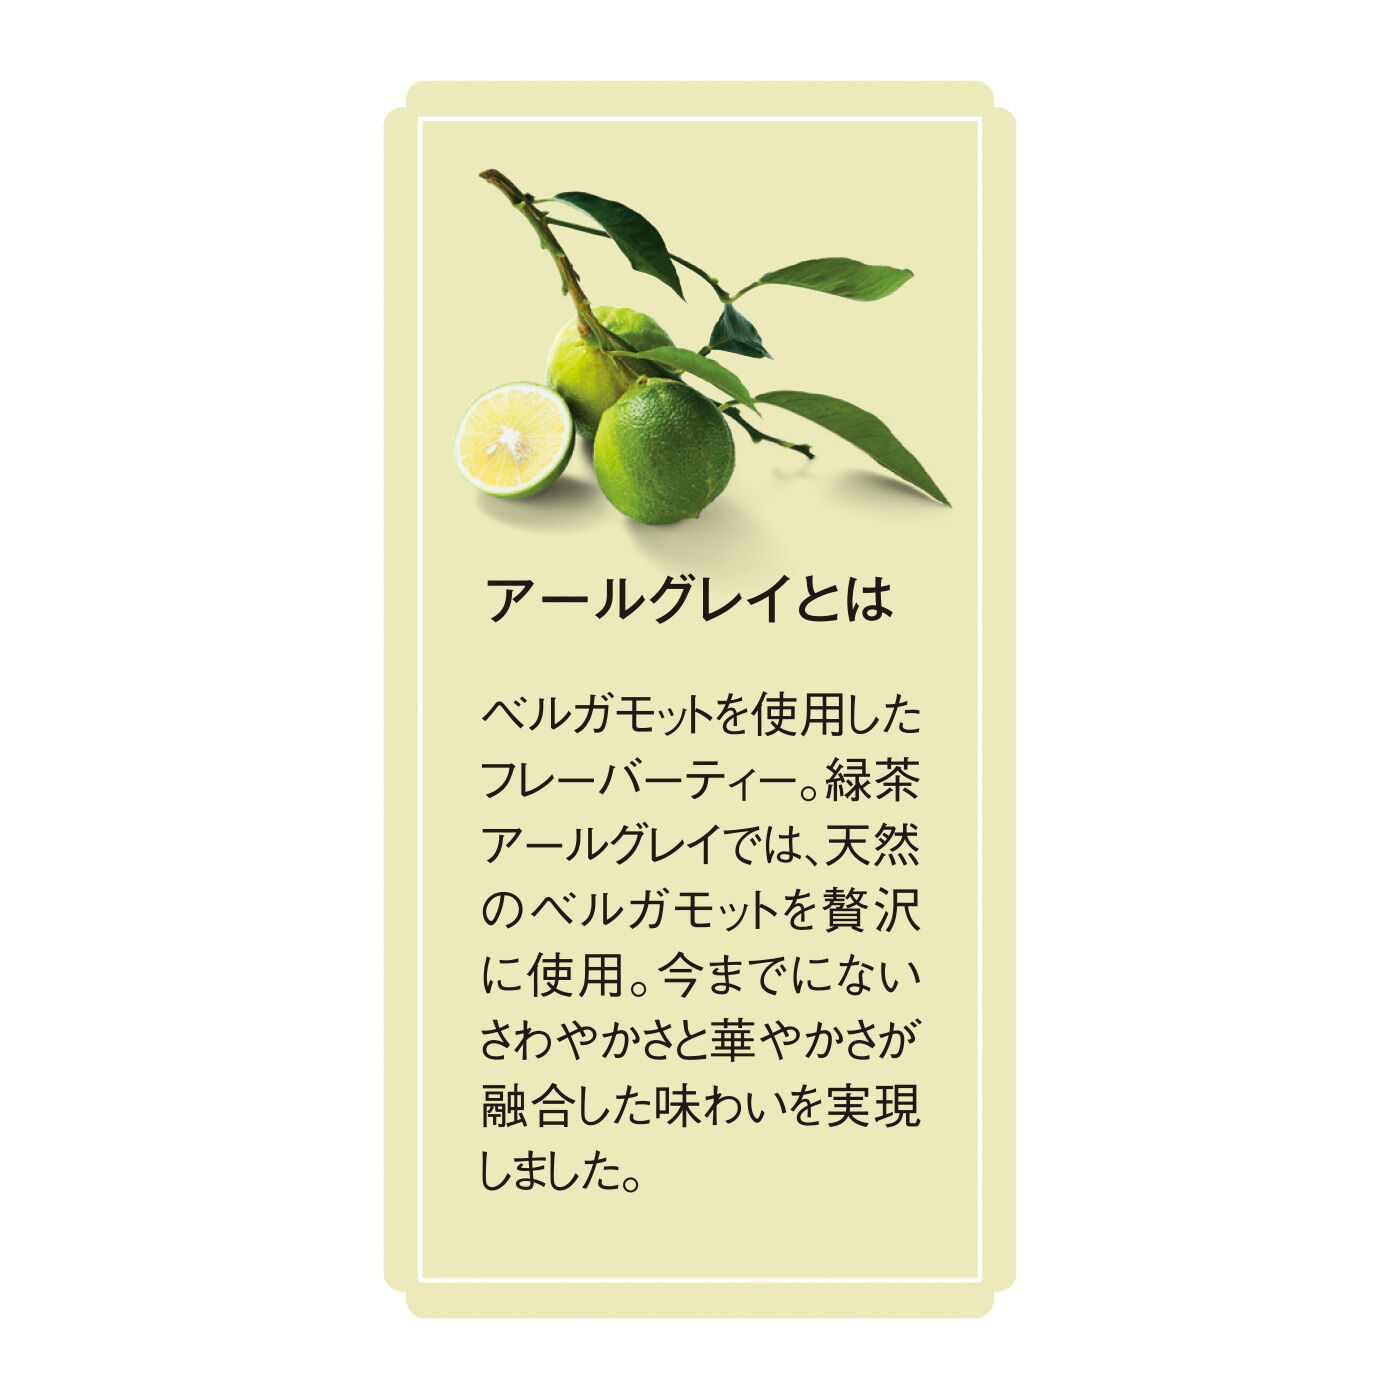 FELISSIMO PARTNERS|神戸キャセリンハウス シャンパングリーンの輝き 緑茶アールグレイの会（12回予約）